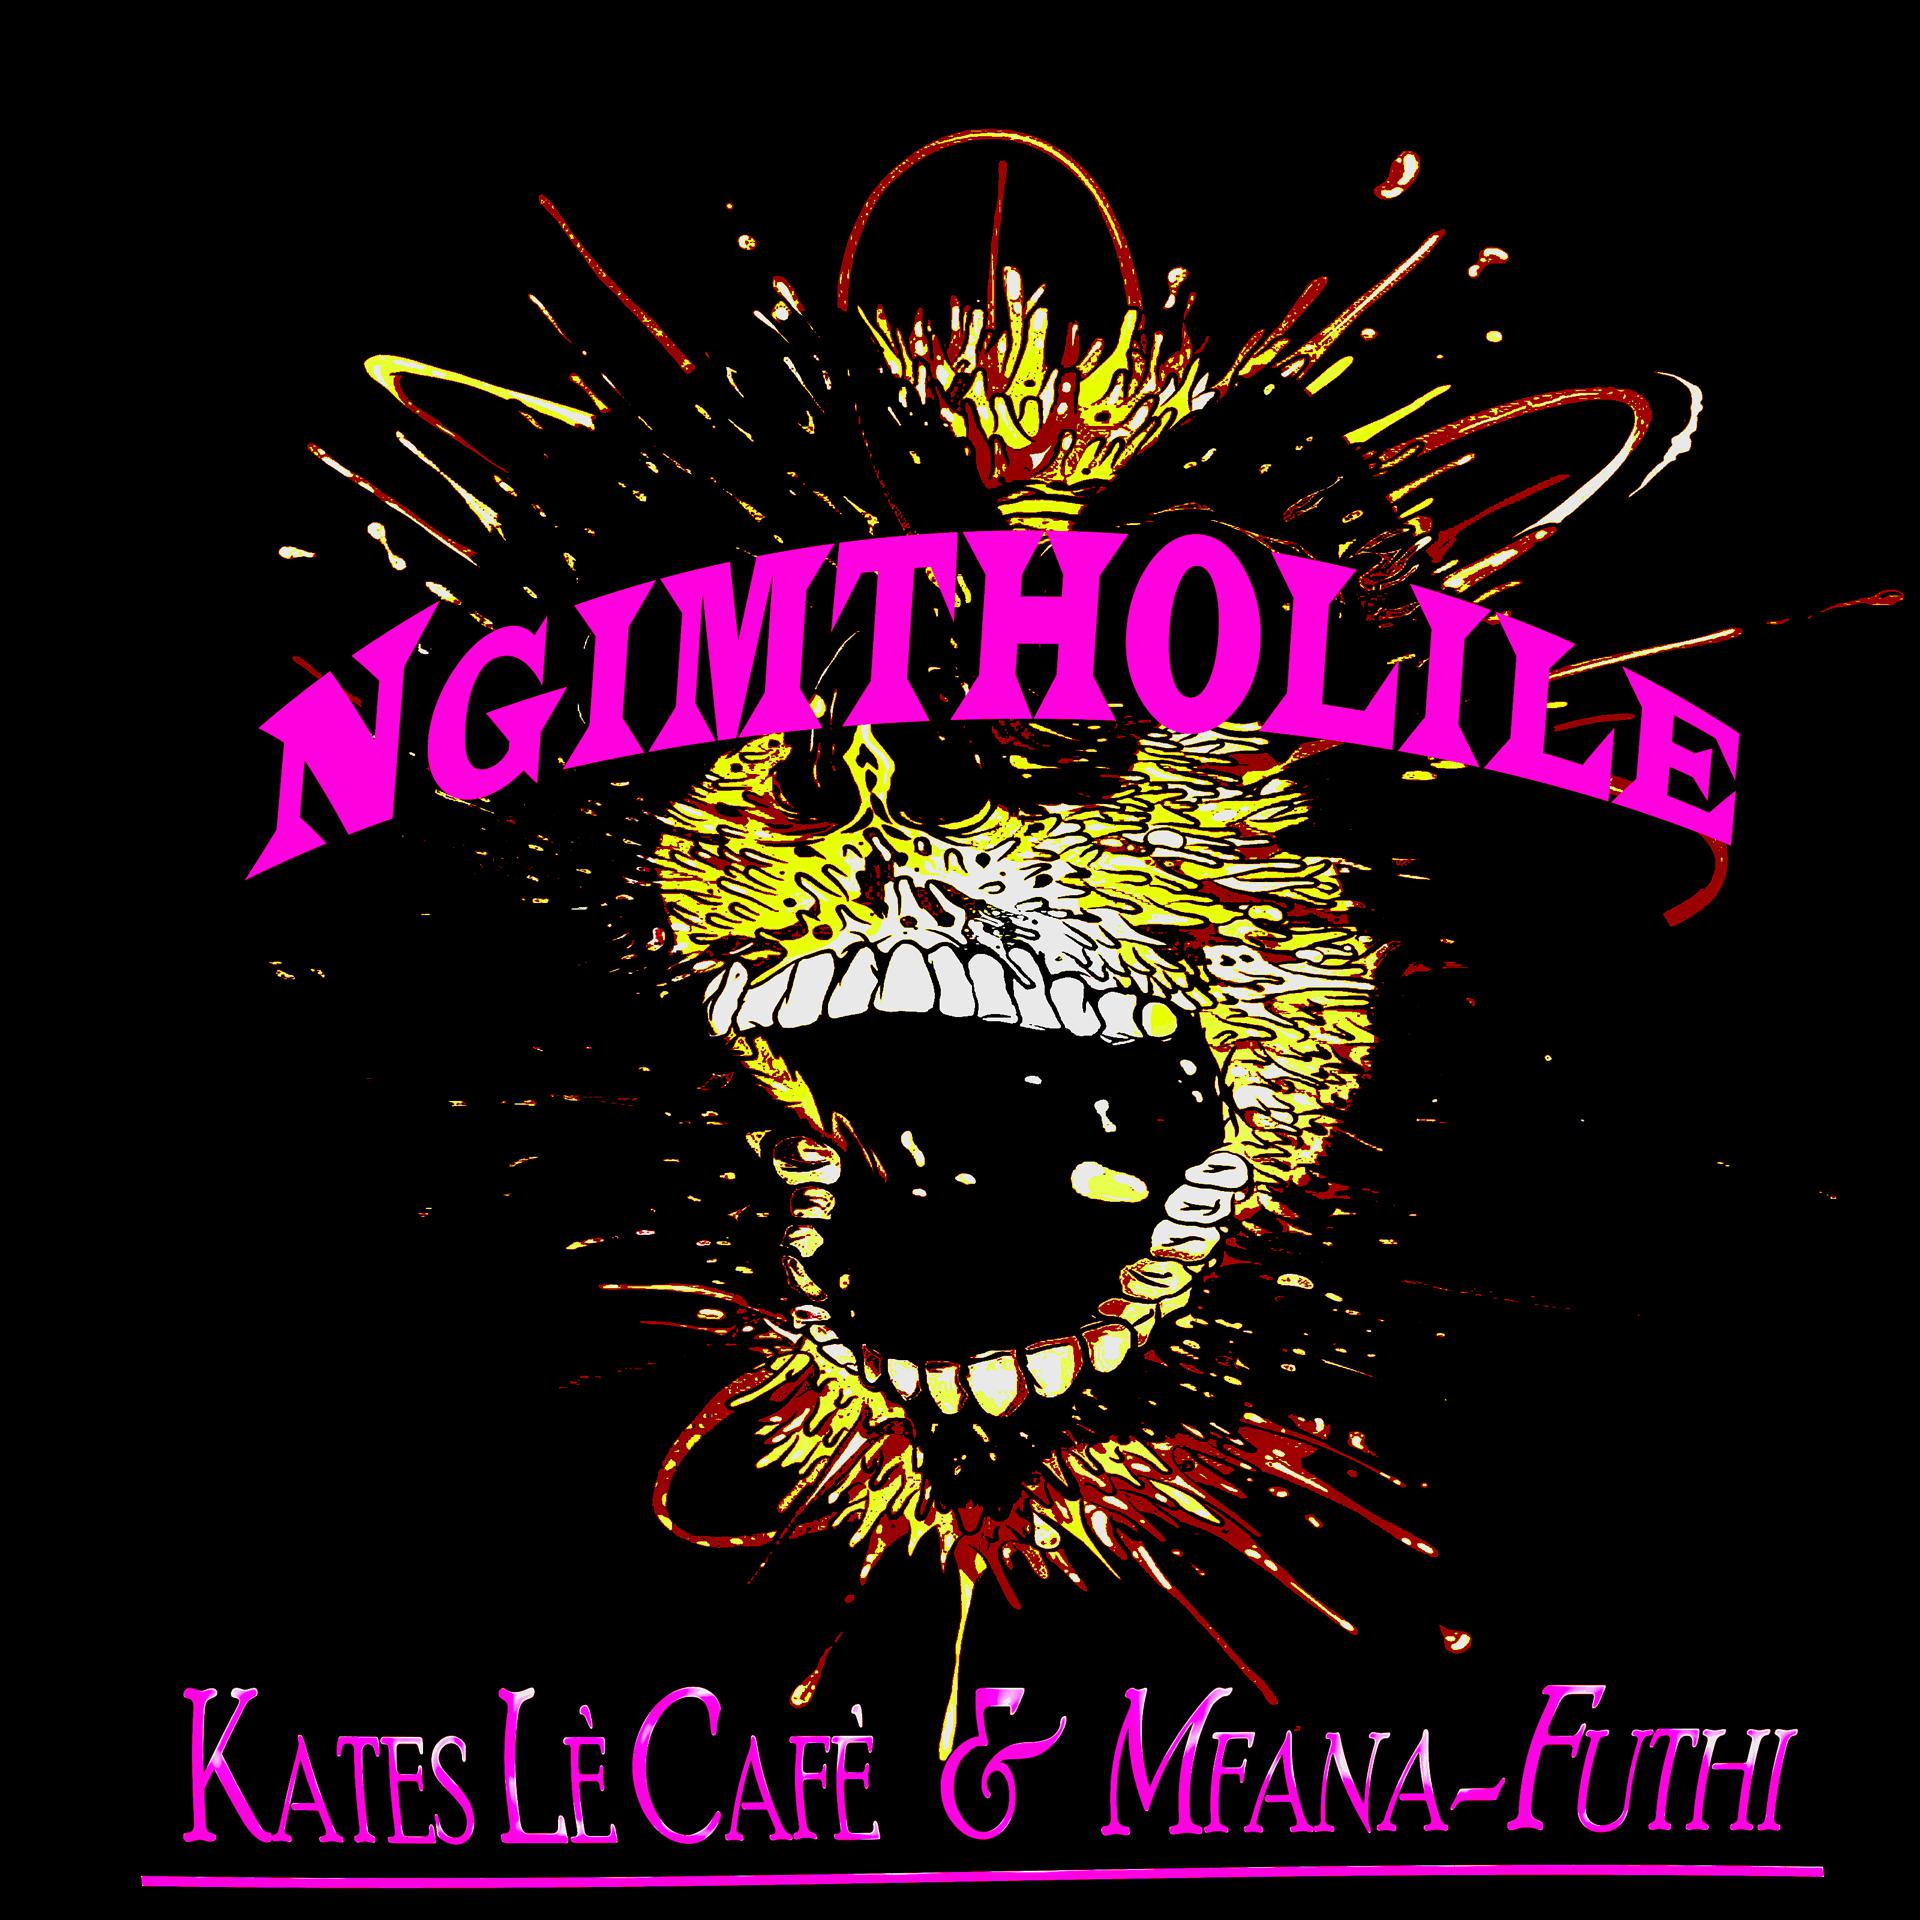 Постер альбома Ngimtholile